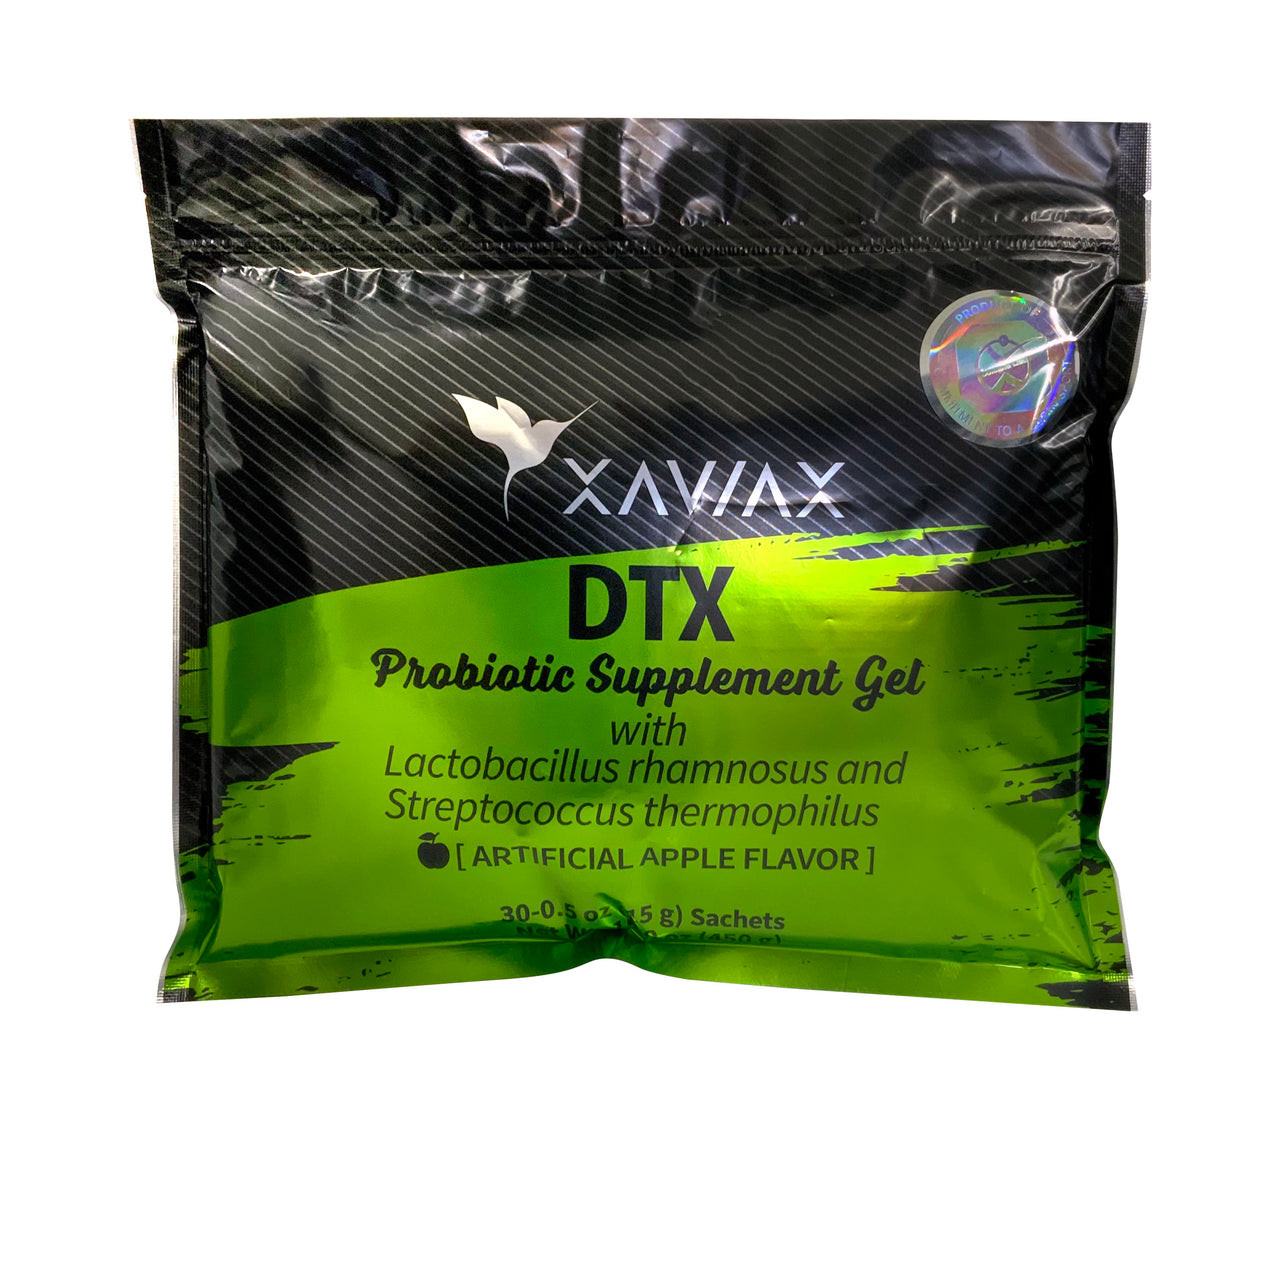 dtx probiotics with fiber